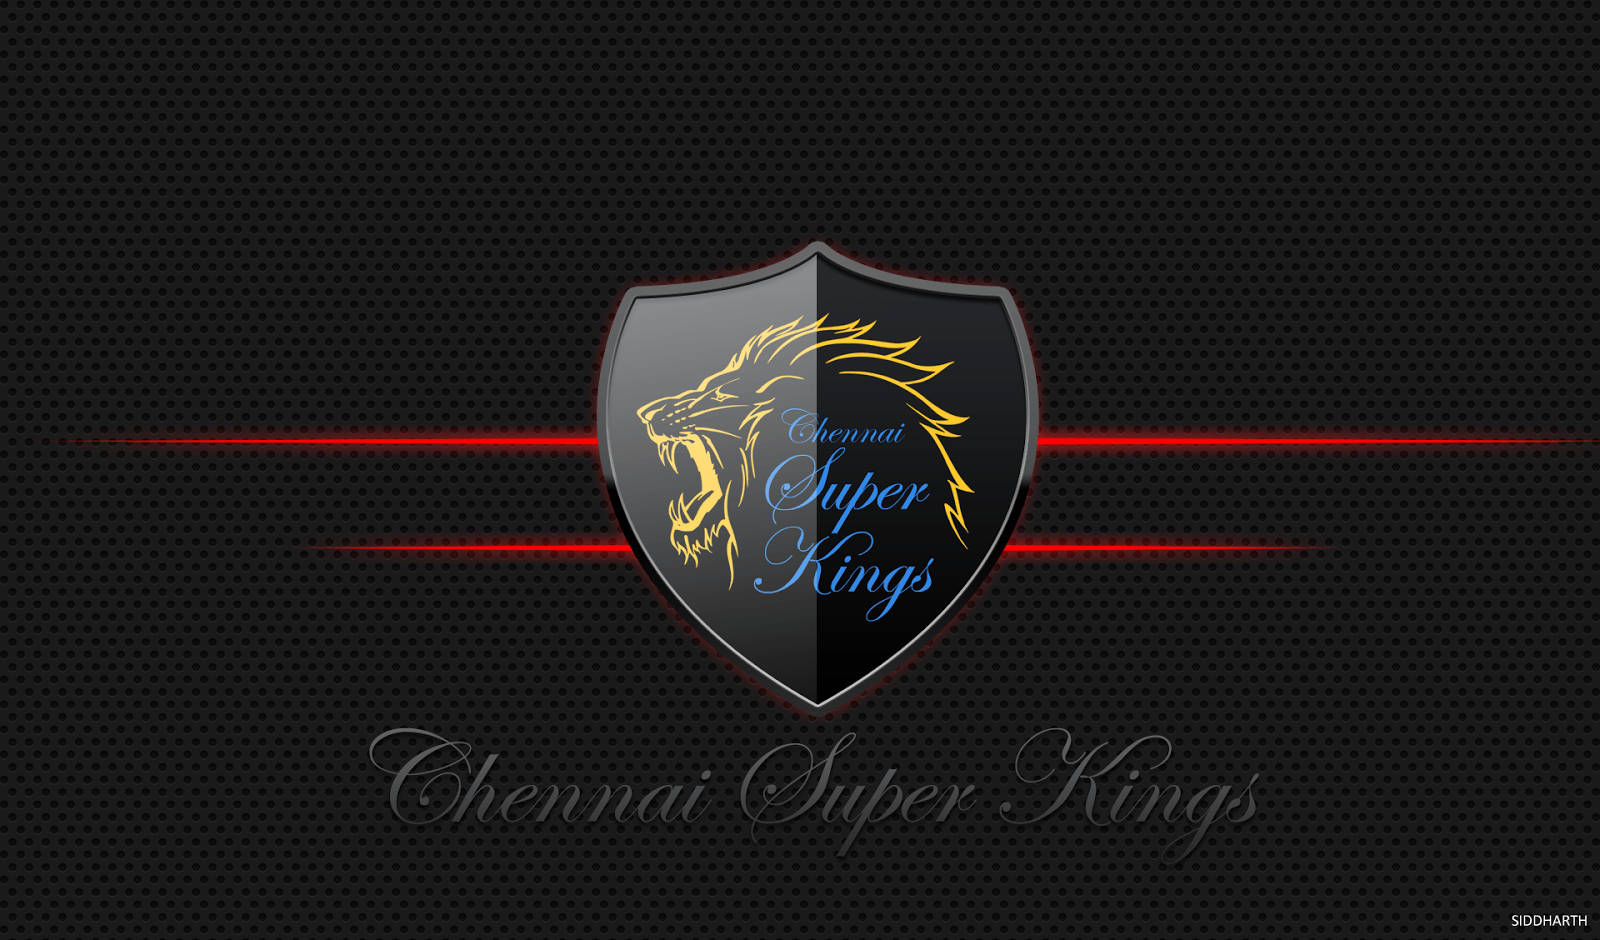 Chennai Super Kings Dark Shield Wallpaper